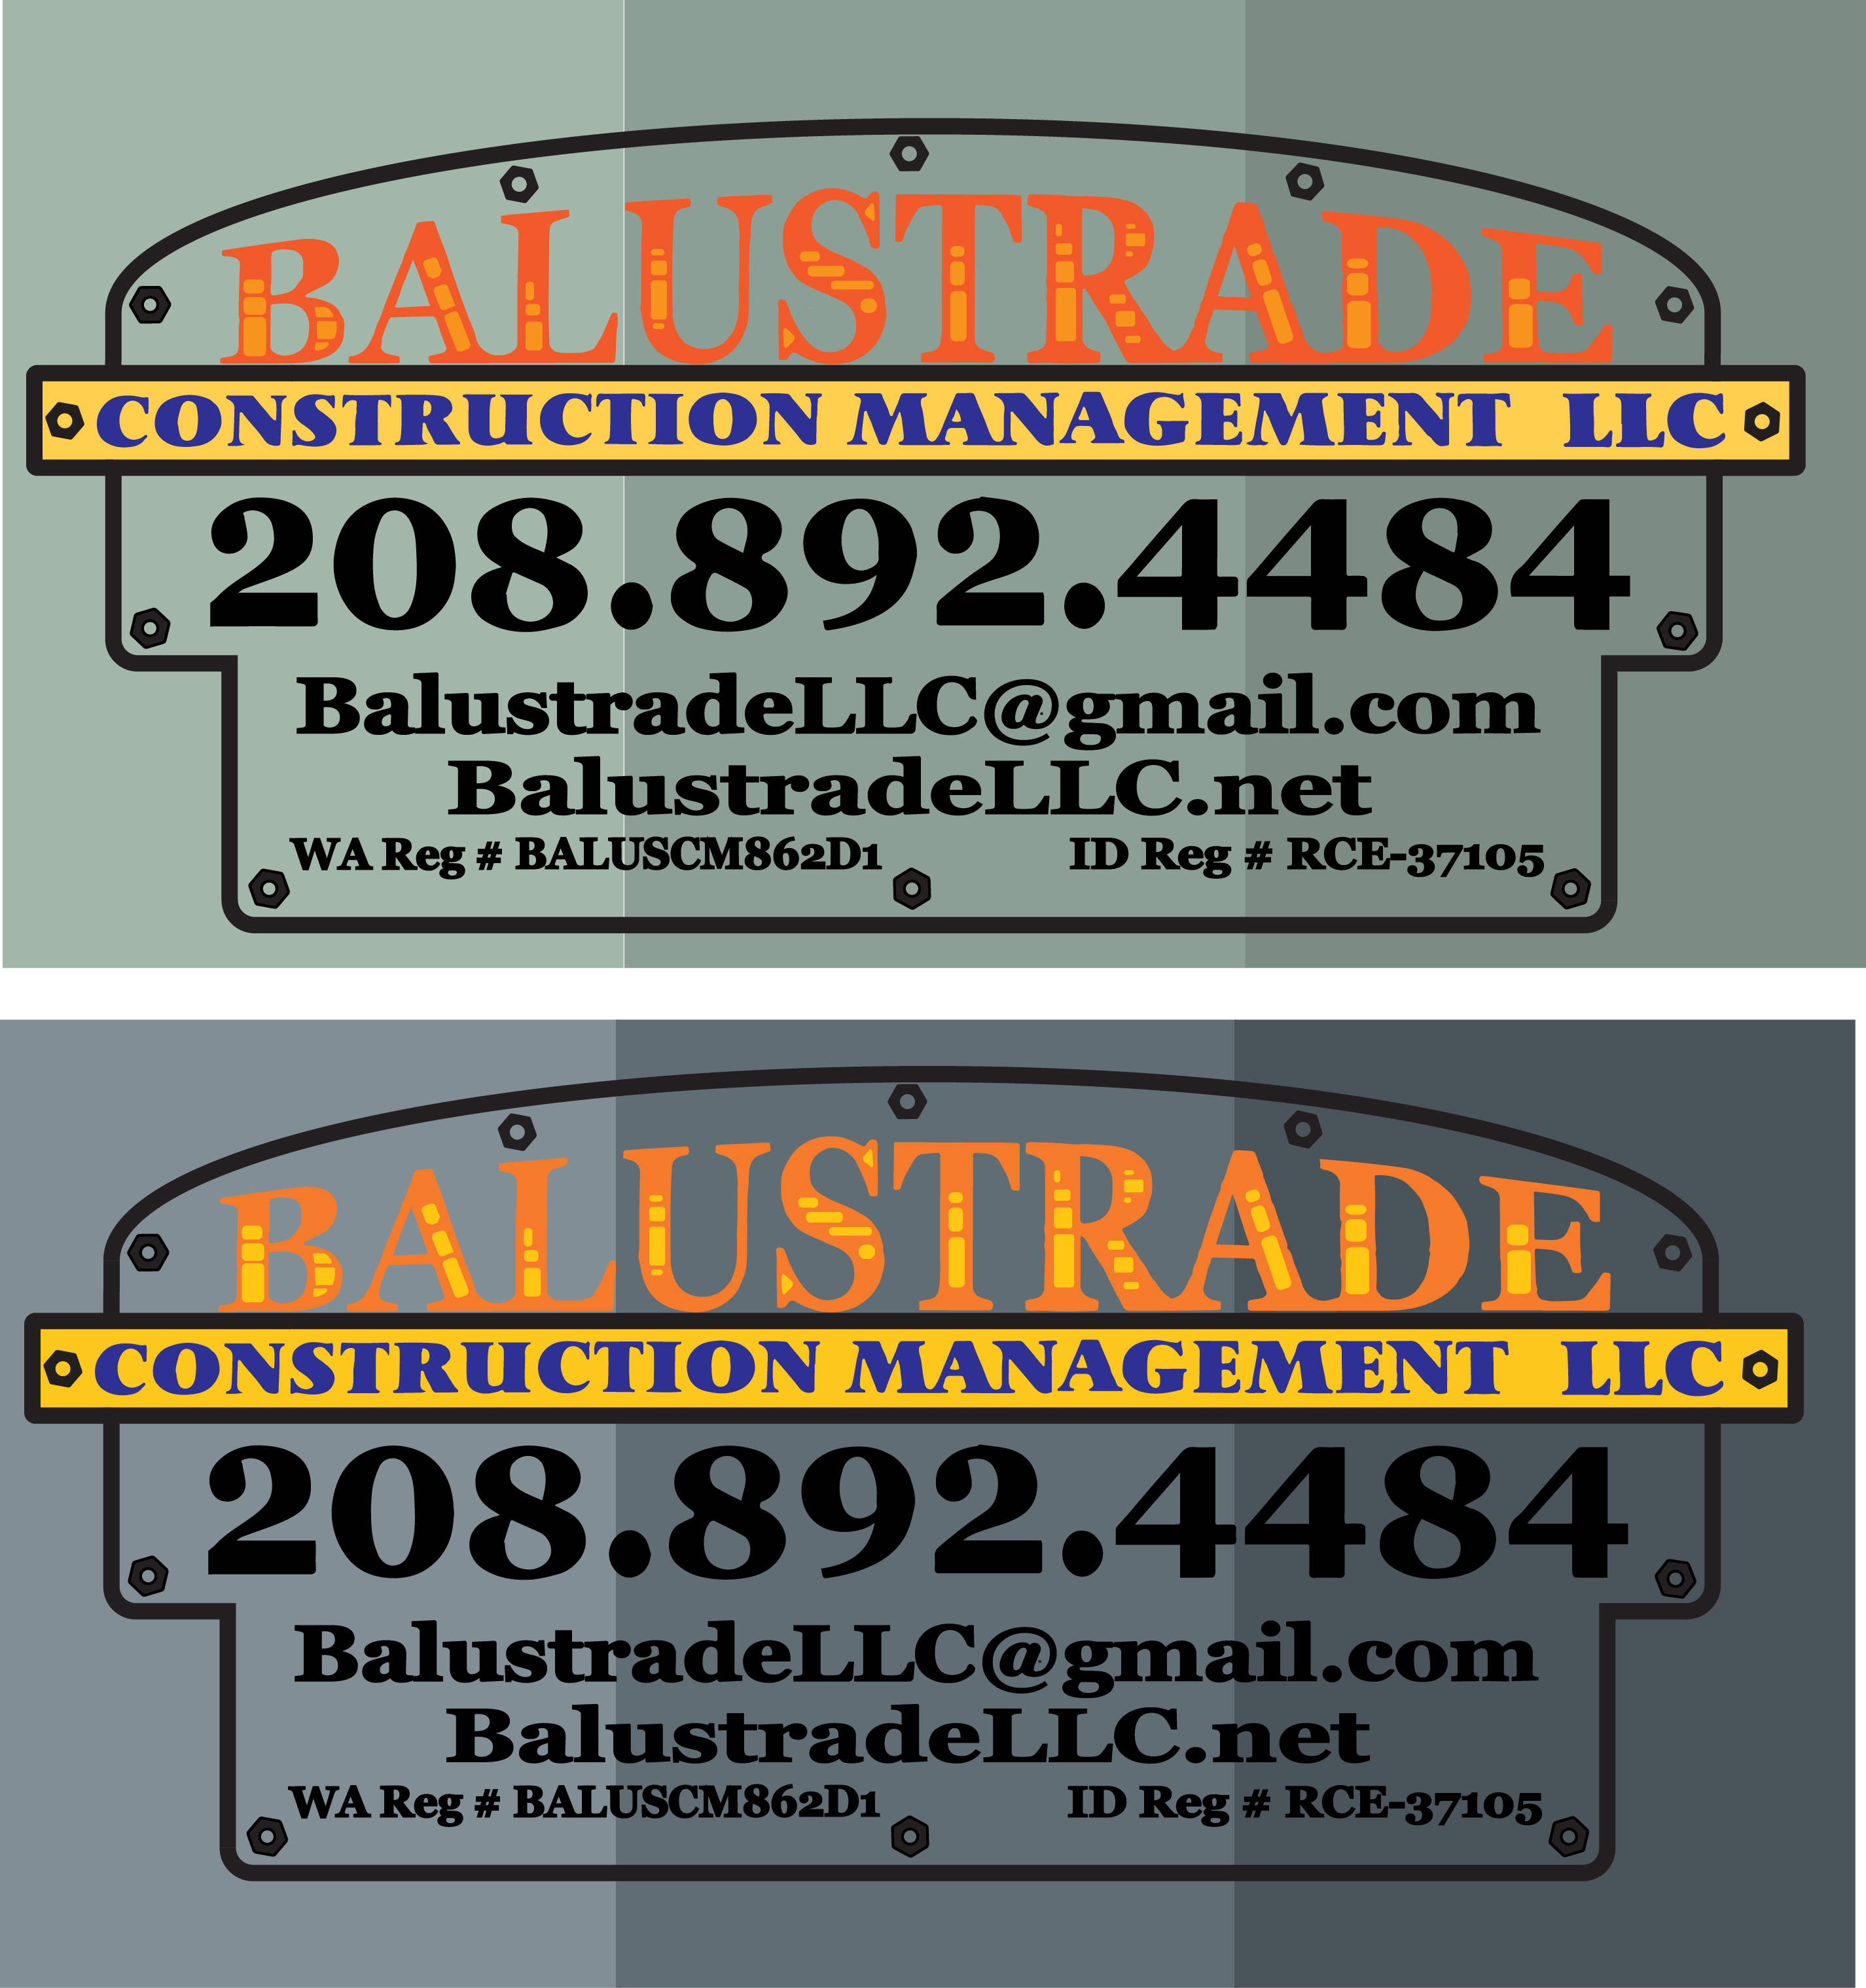 Balustrade Construction Management, LLC Logo